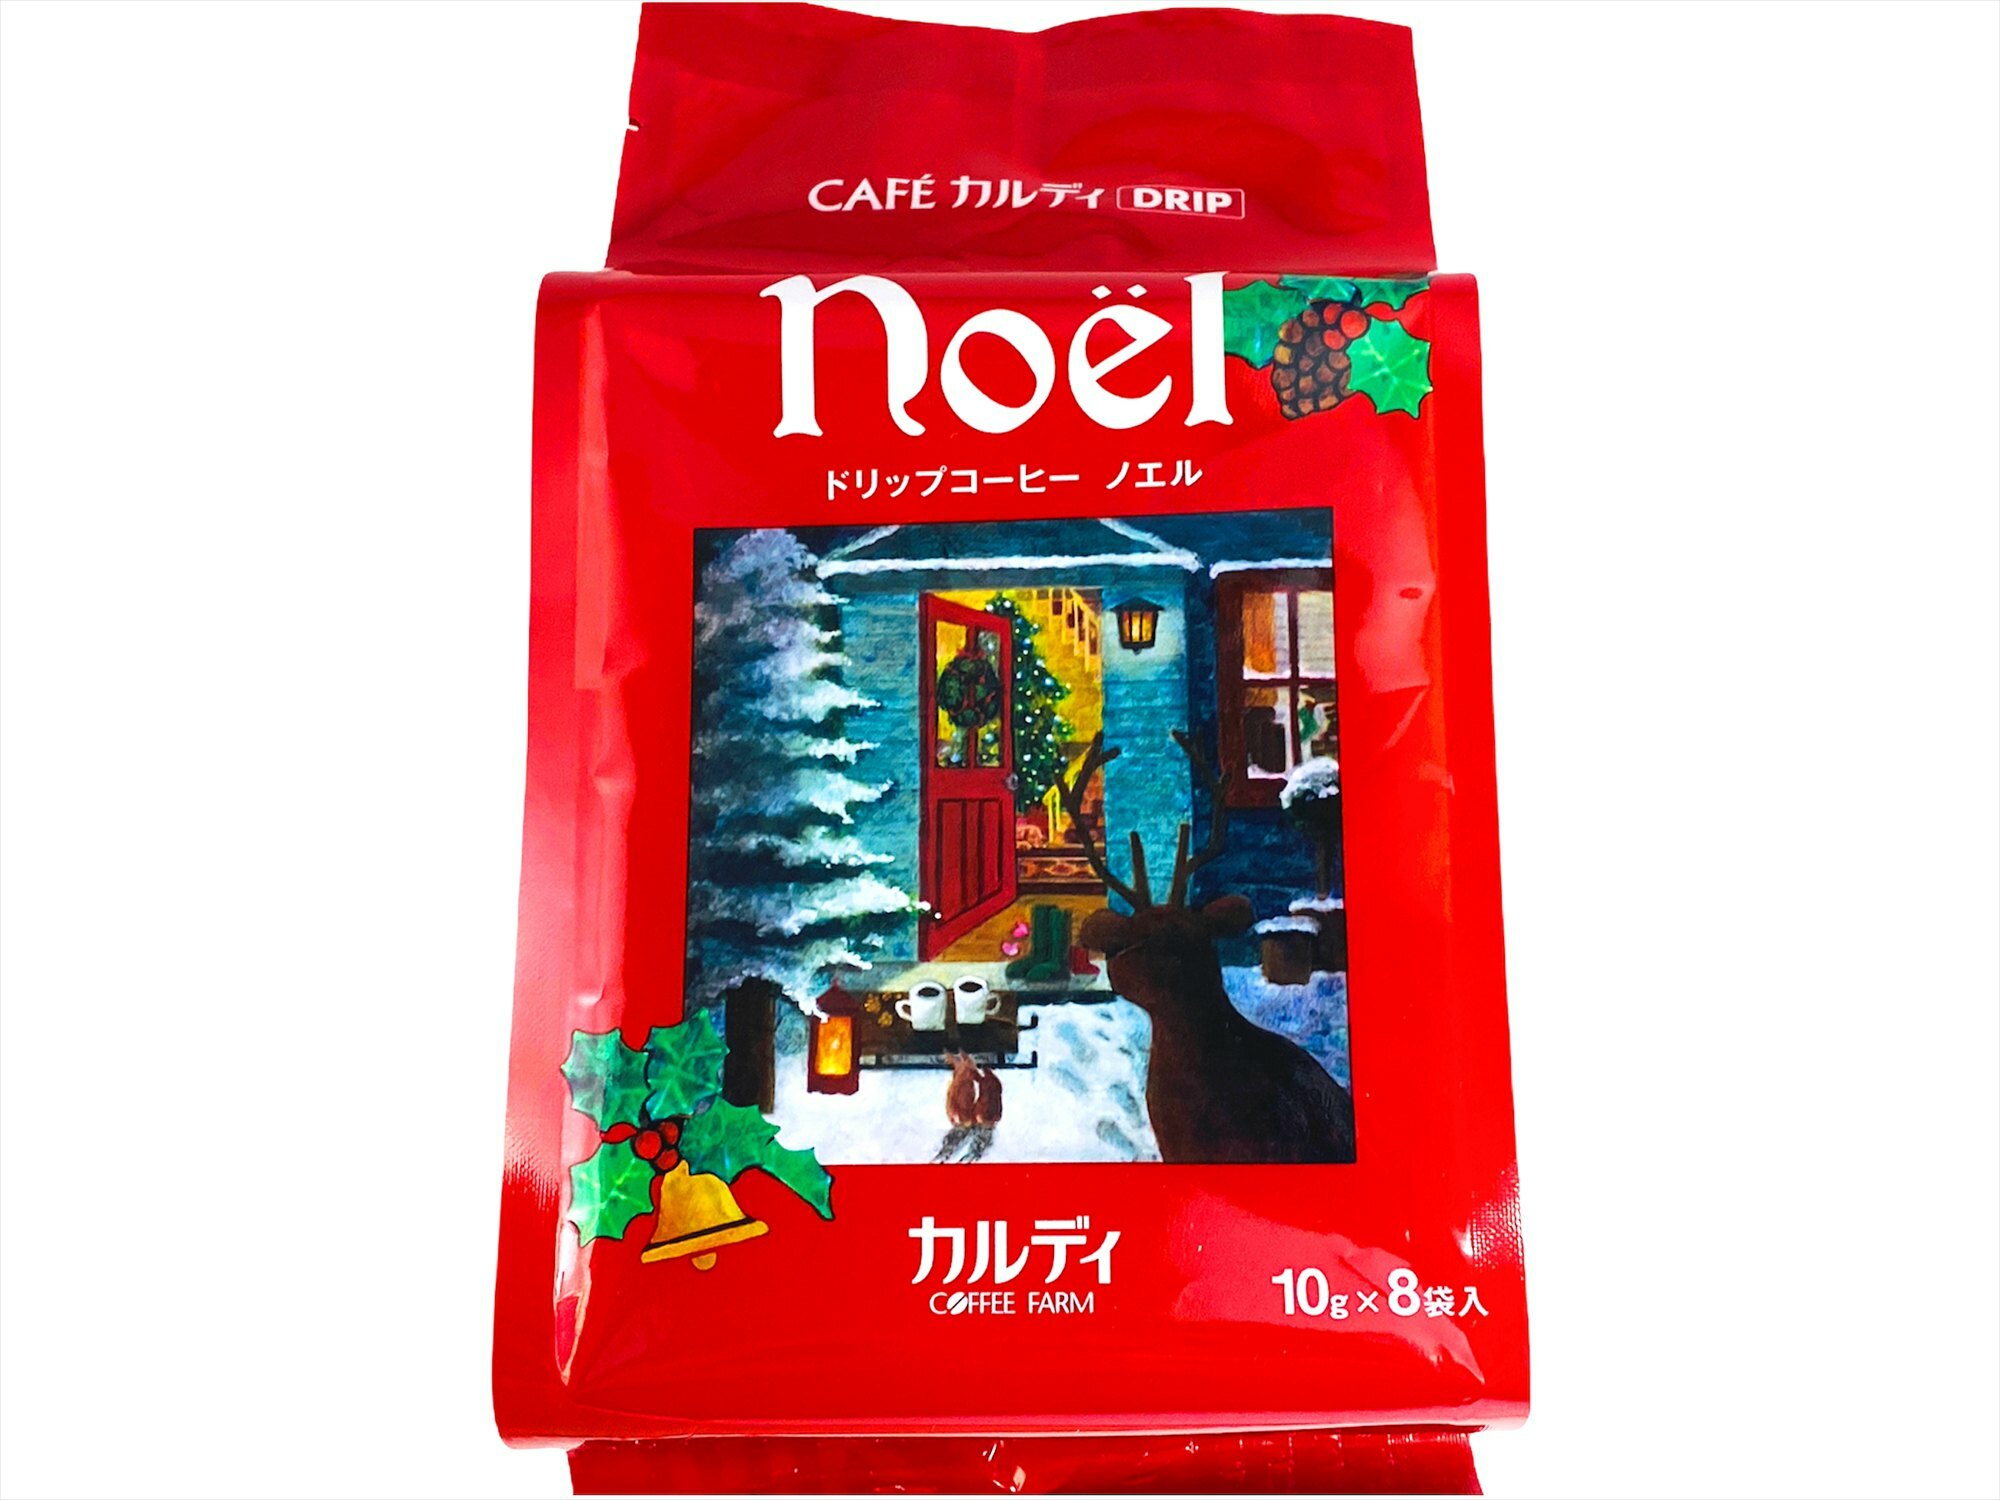 Cafe Kaldi Noel